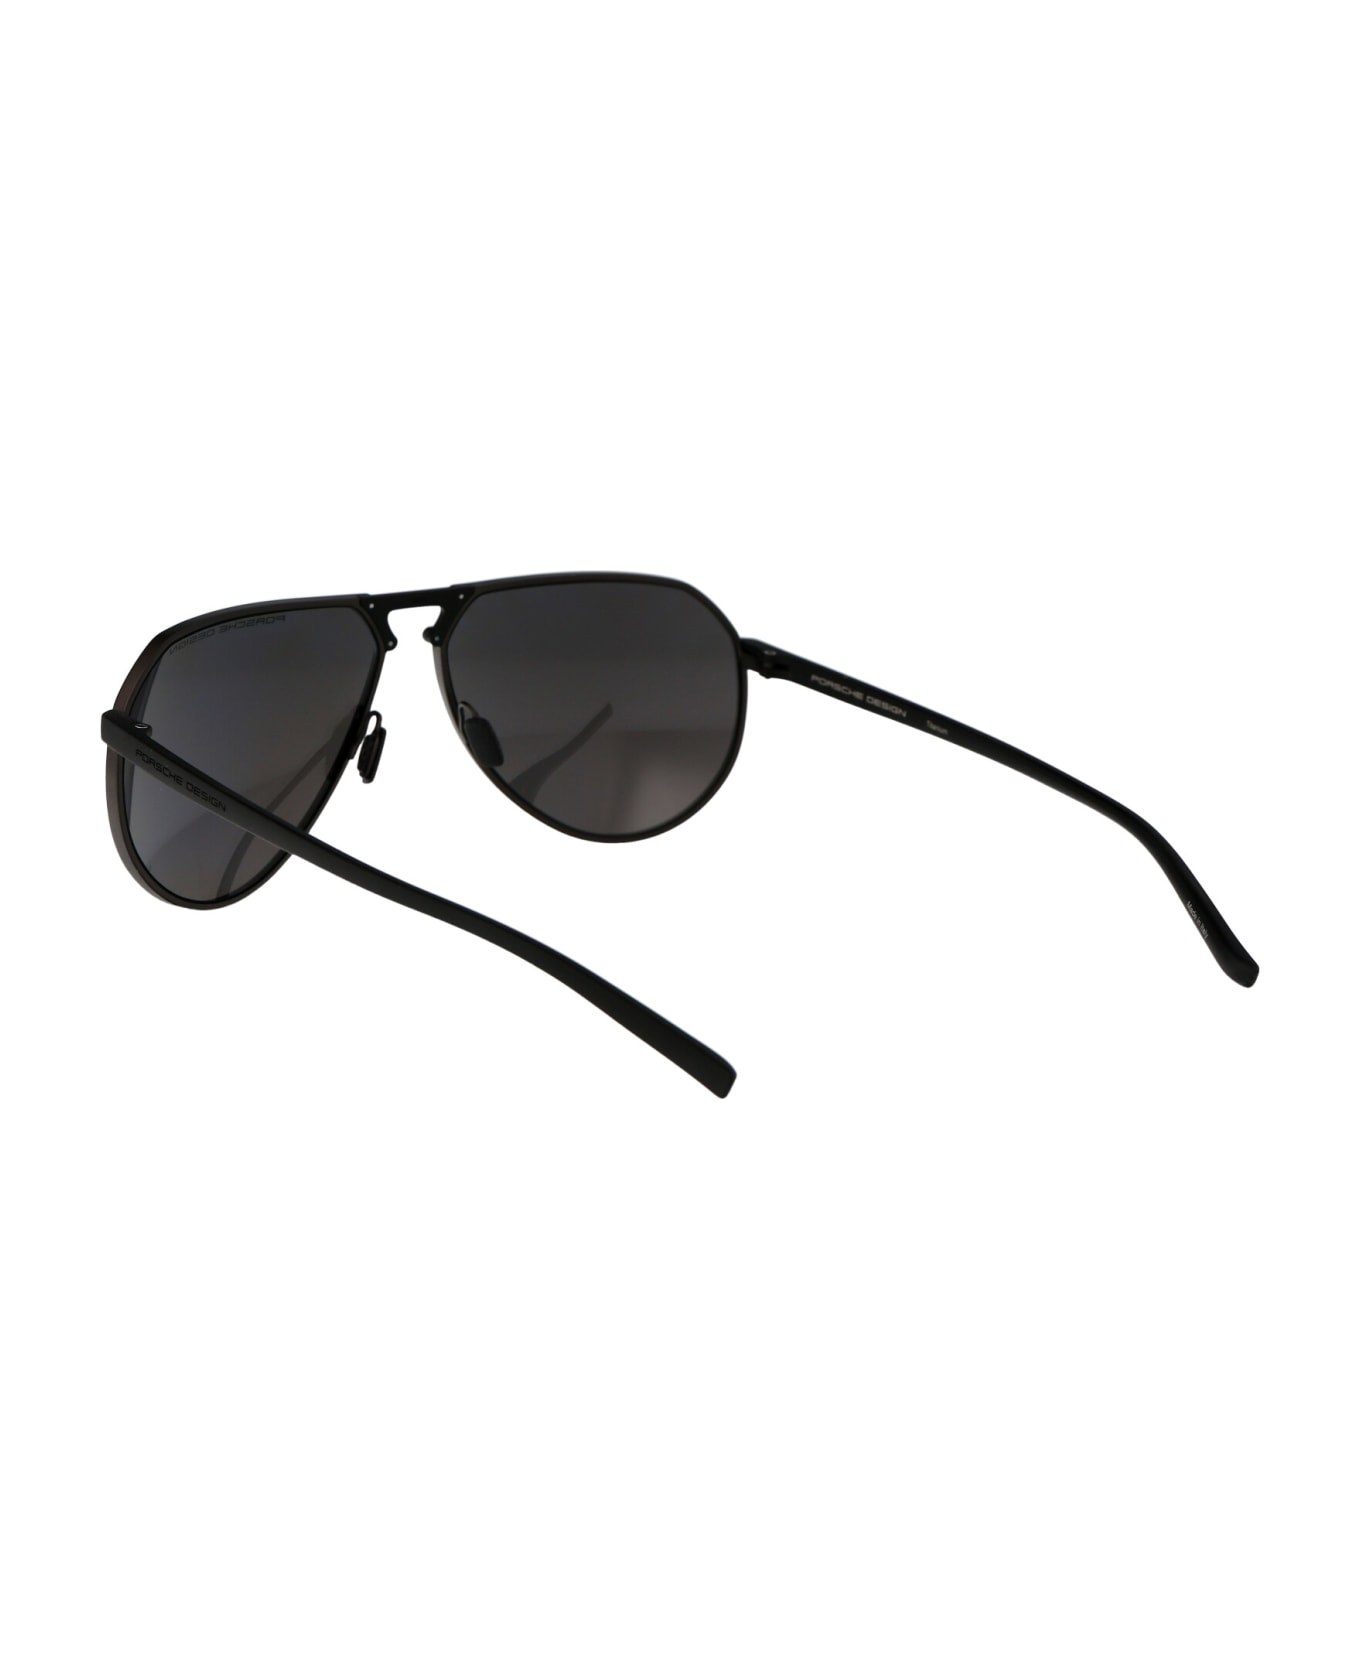 Porsche Design P8938 Sunglasses - D775 DARK GREY BLACK サングラス